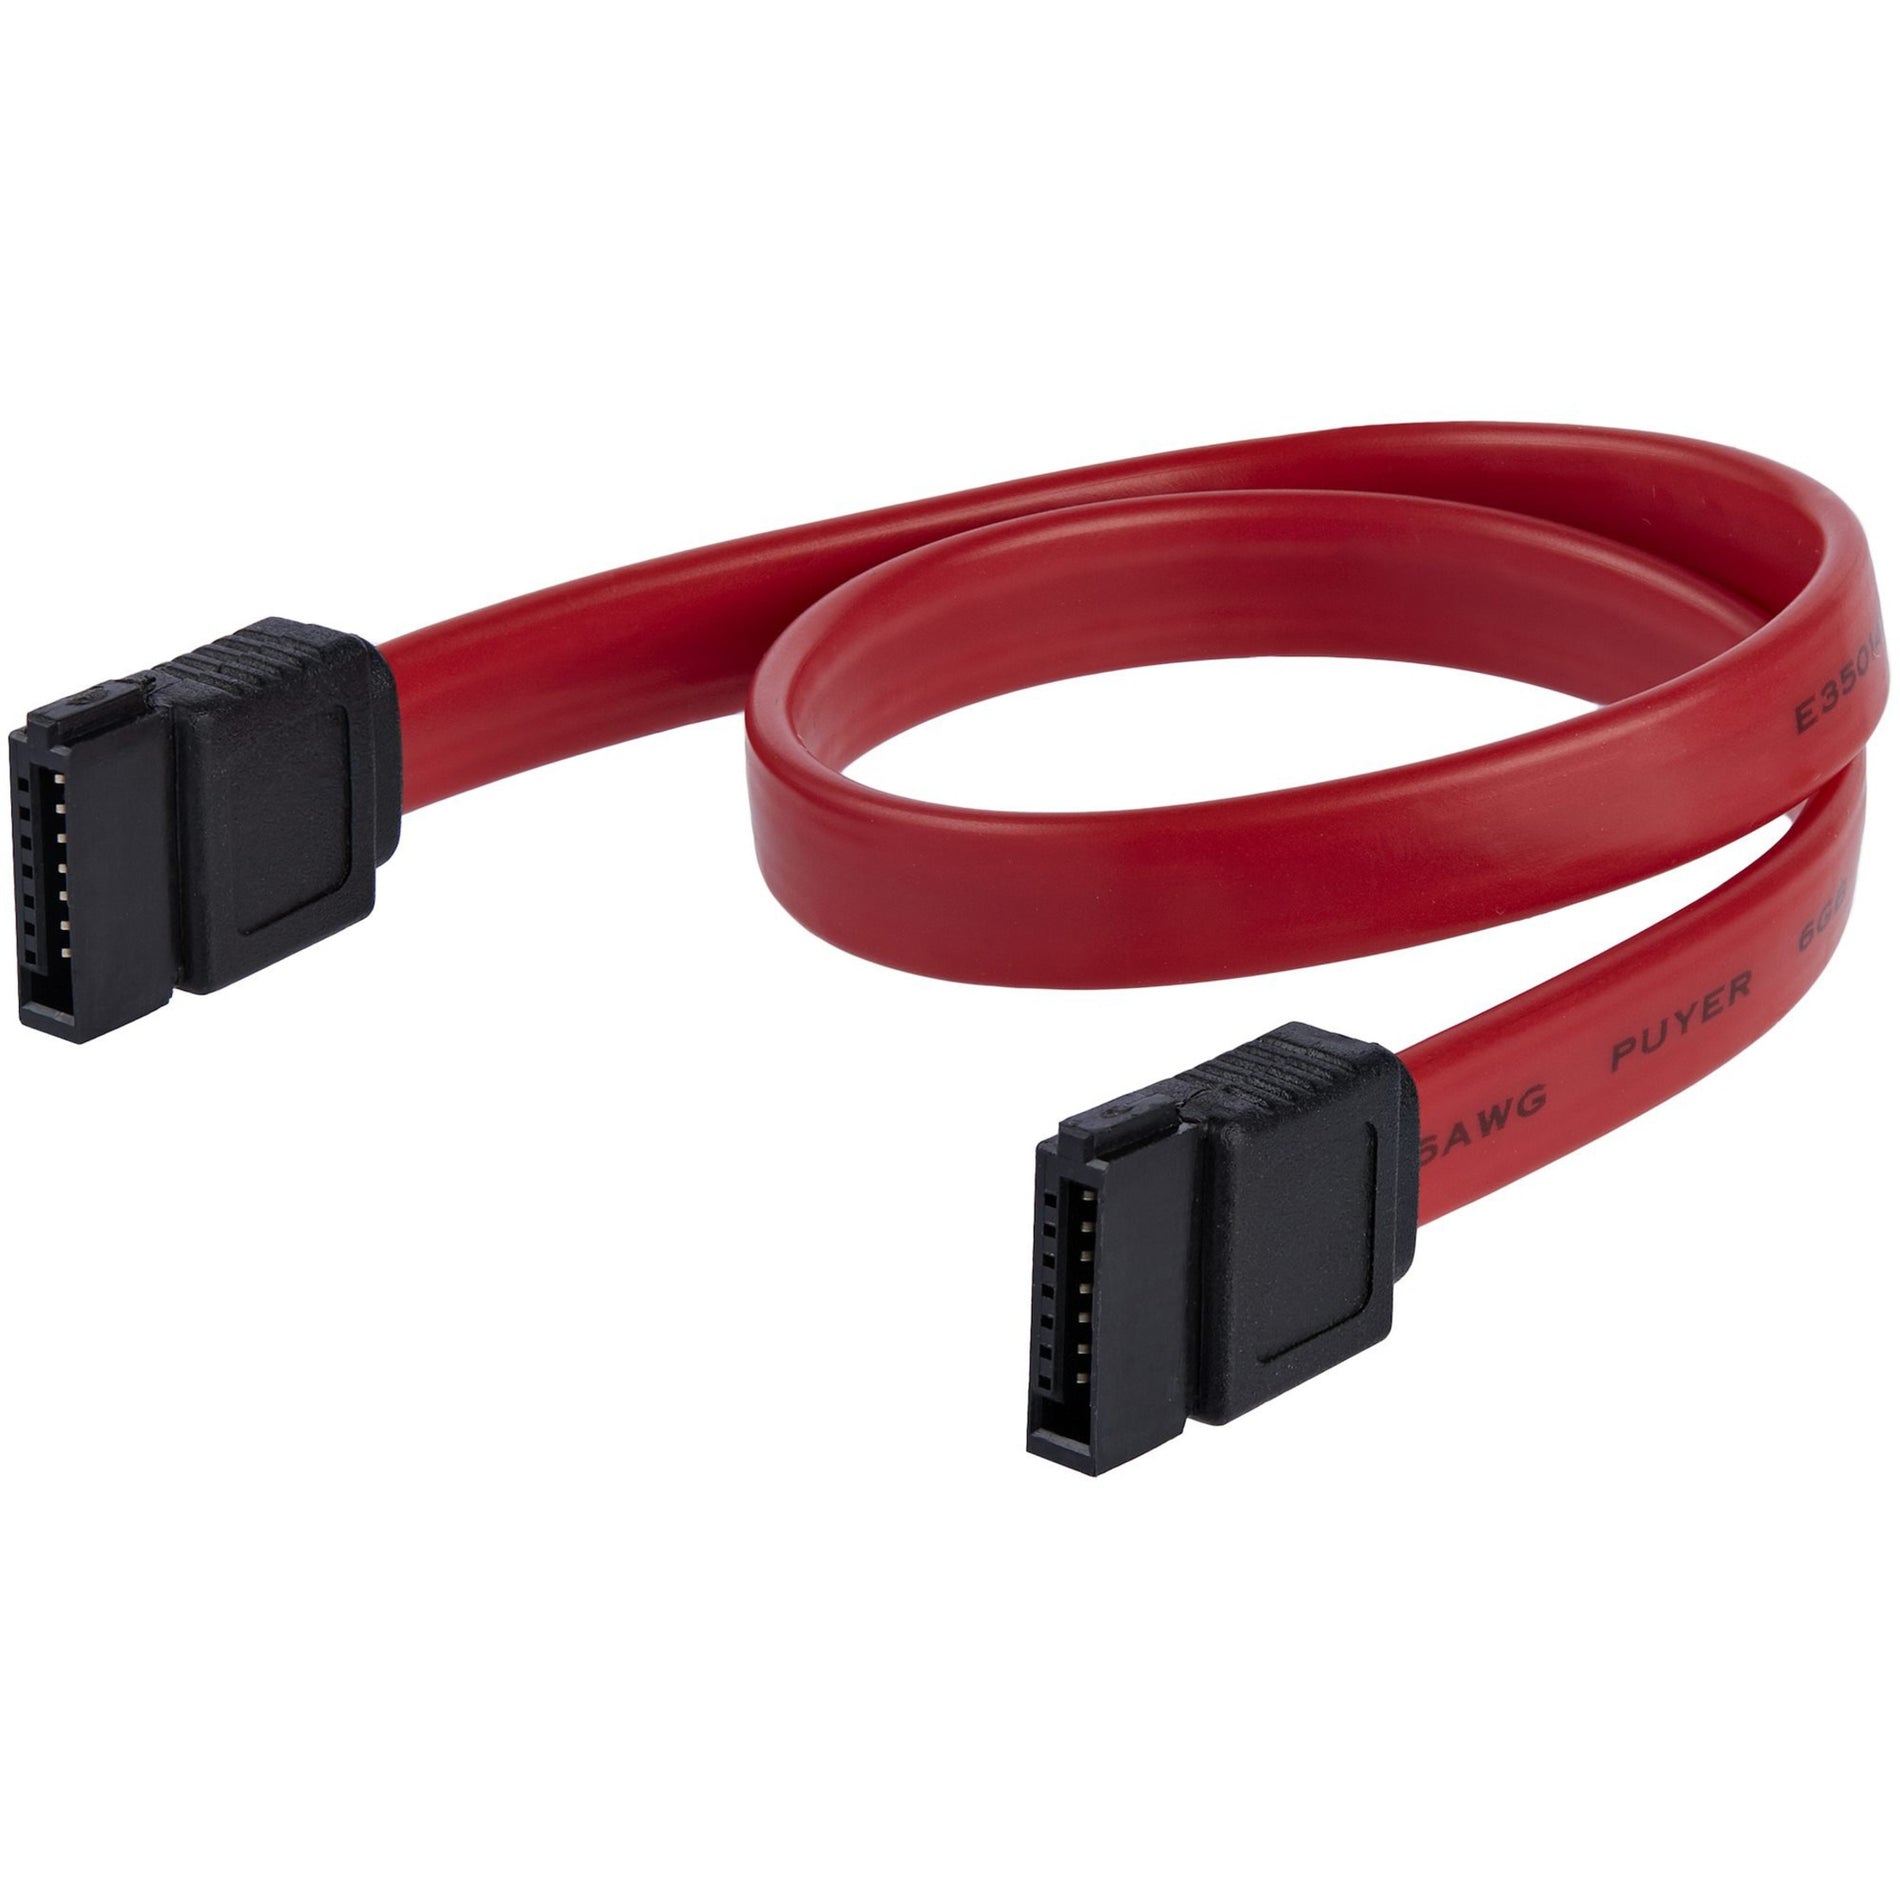 StarTech.com SATA12 12in SATA Serial ATA Cable, Flexible, 6 Gbit/s Data Transfer Rate, Red